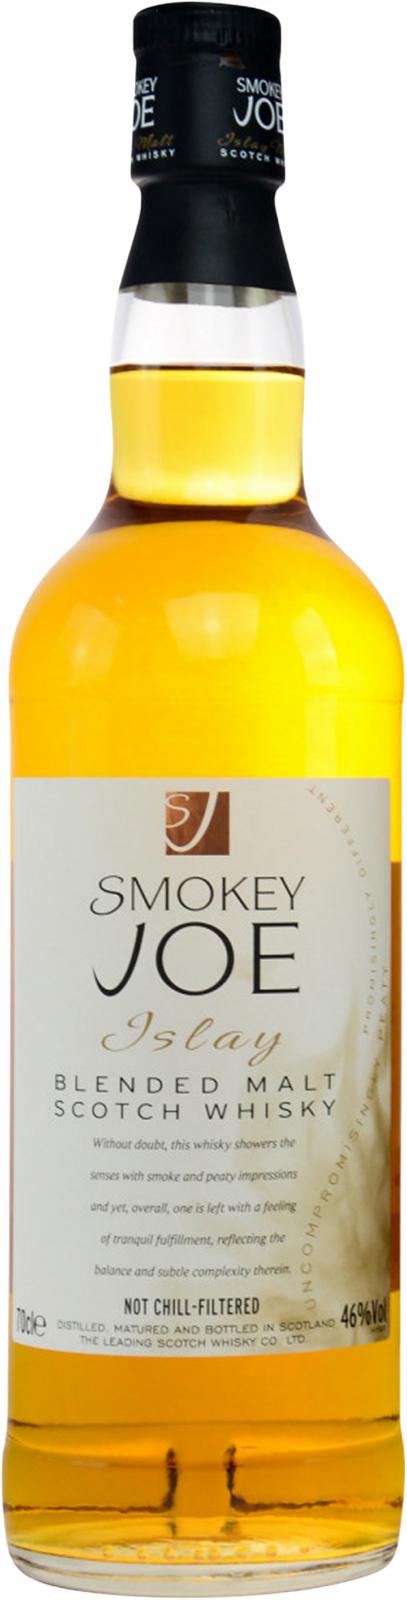 Smokey Joe Islay Blended Malt Scotch Whisky 46% 700ml